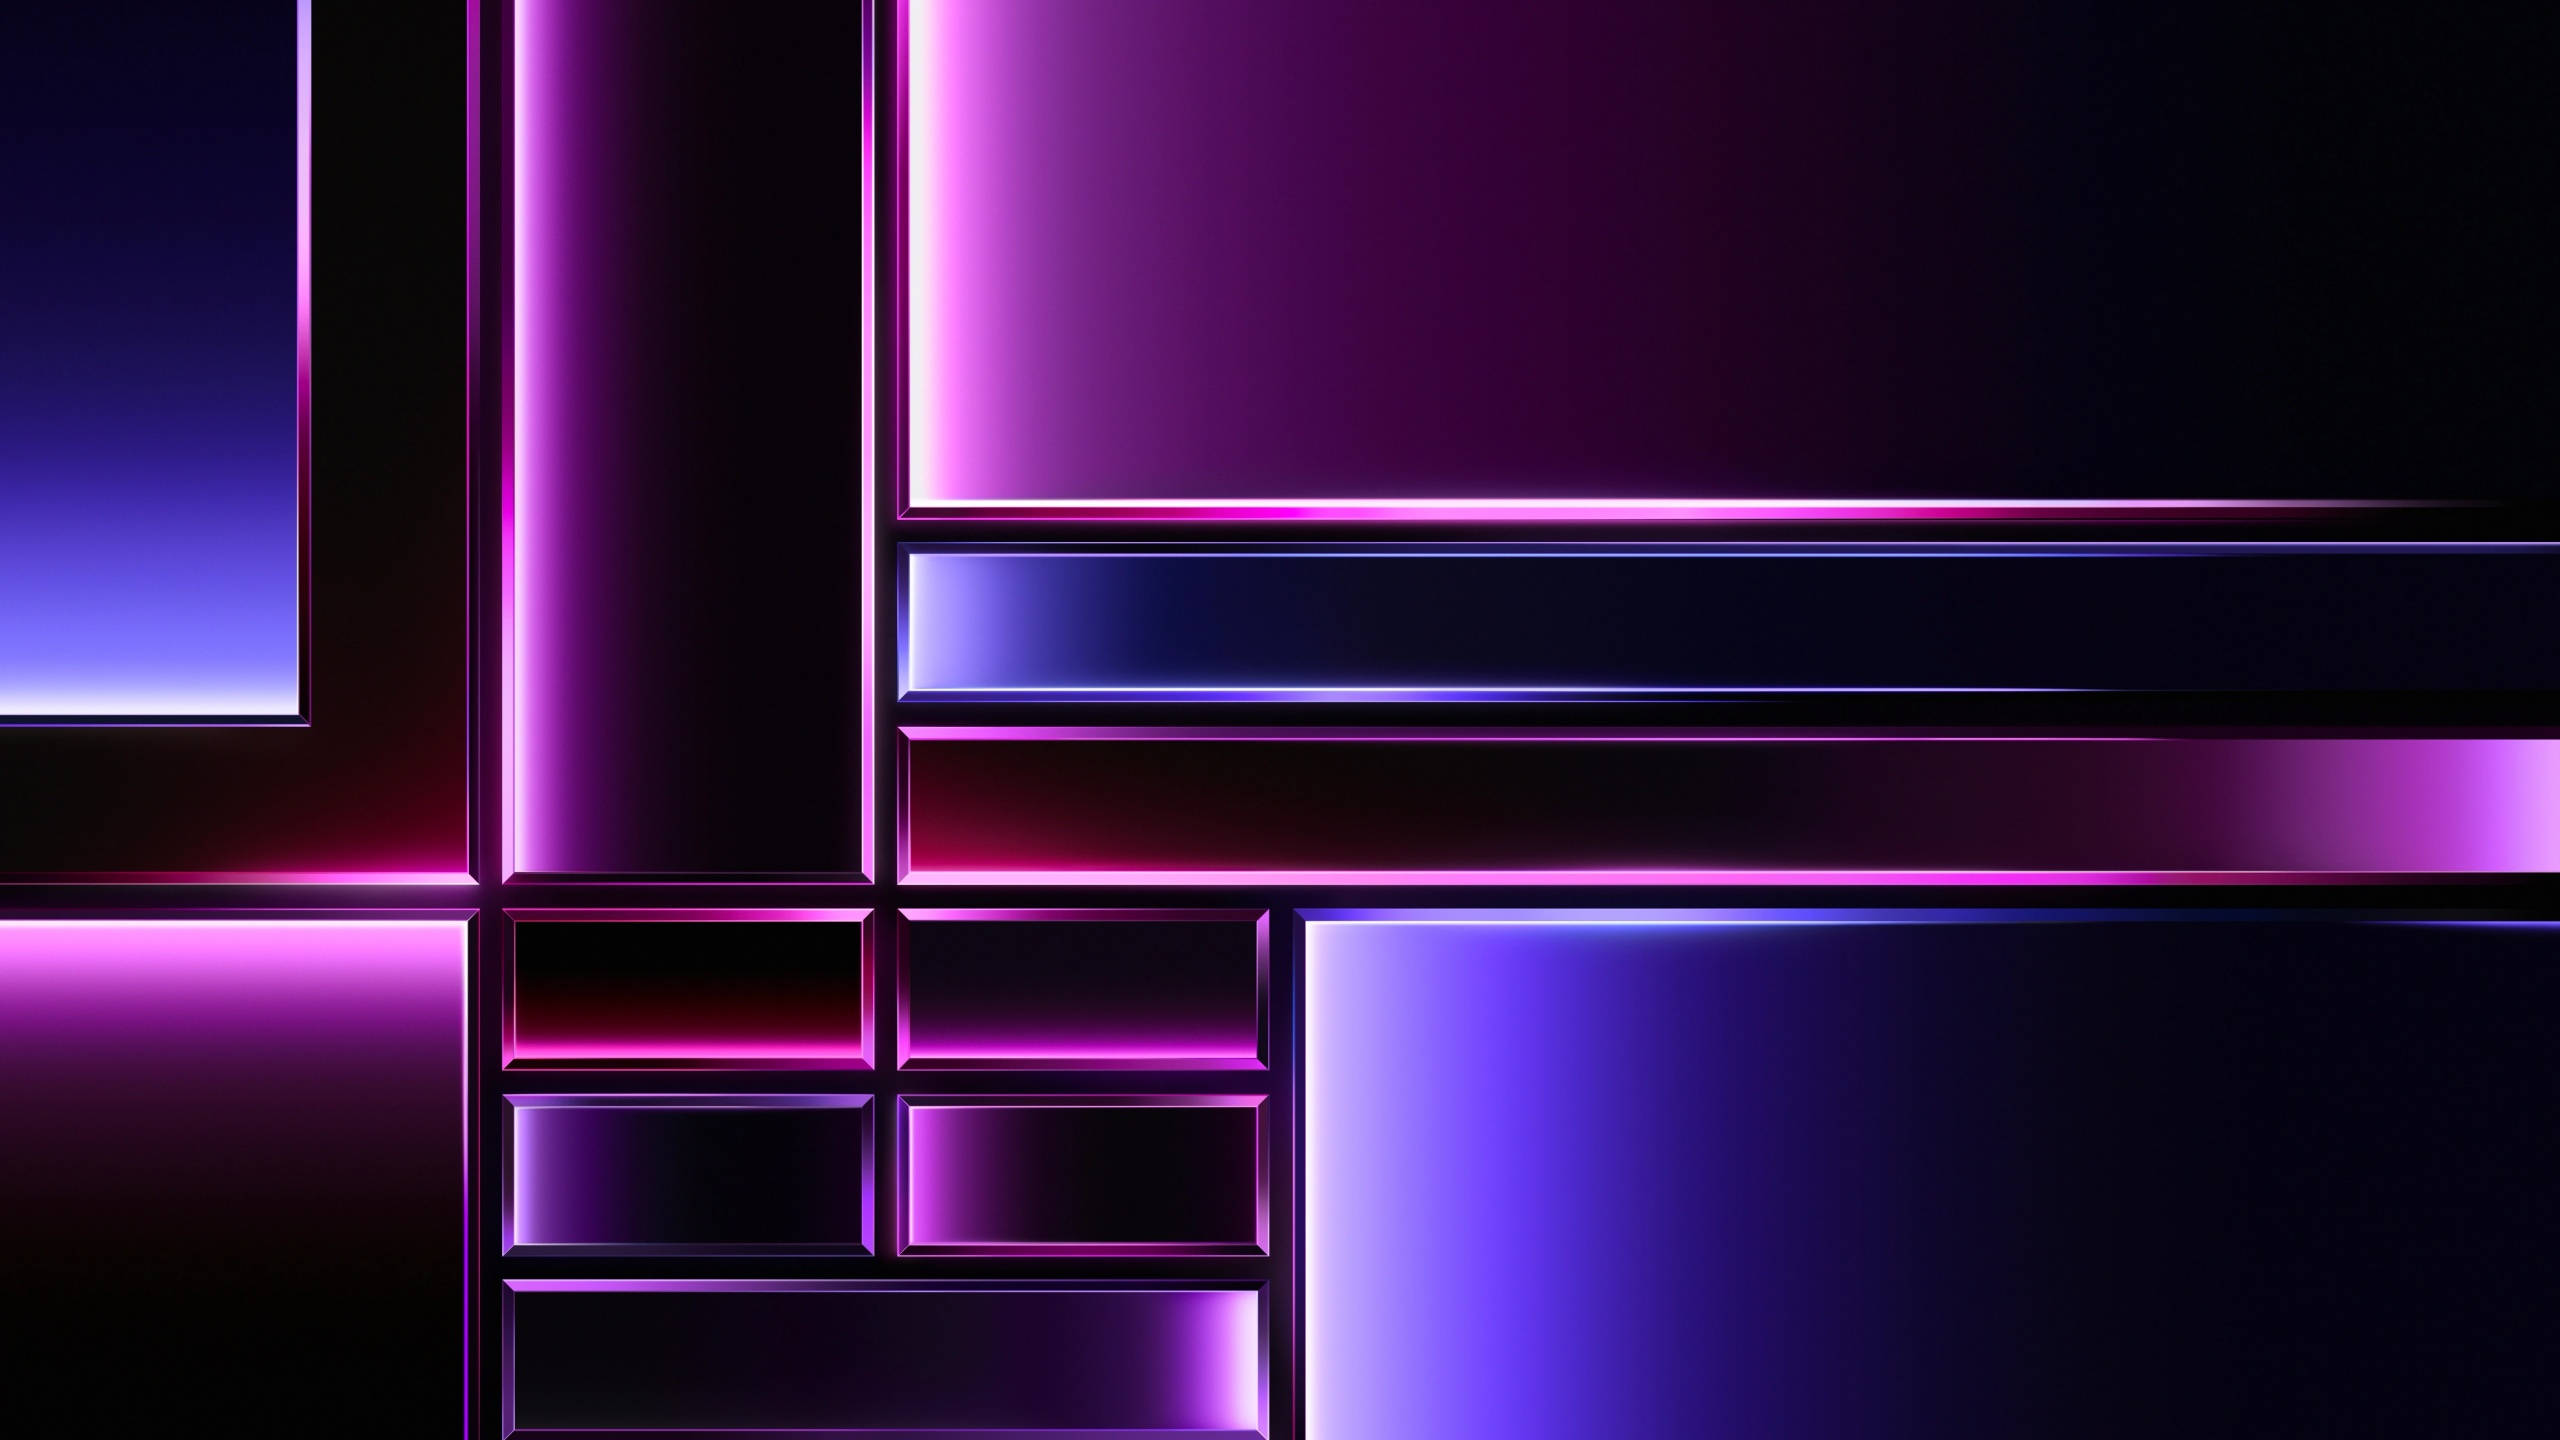 Free Funky purple iPhone wallpaper grid  Free Vector  rawpixel   nohatcc